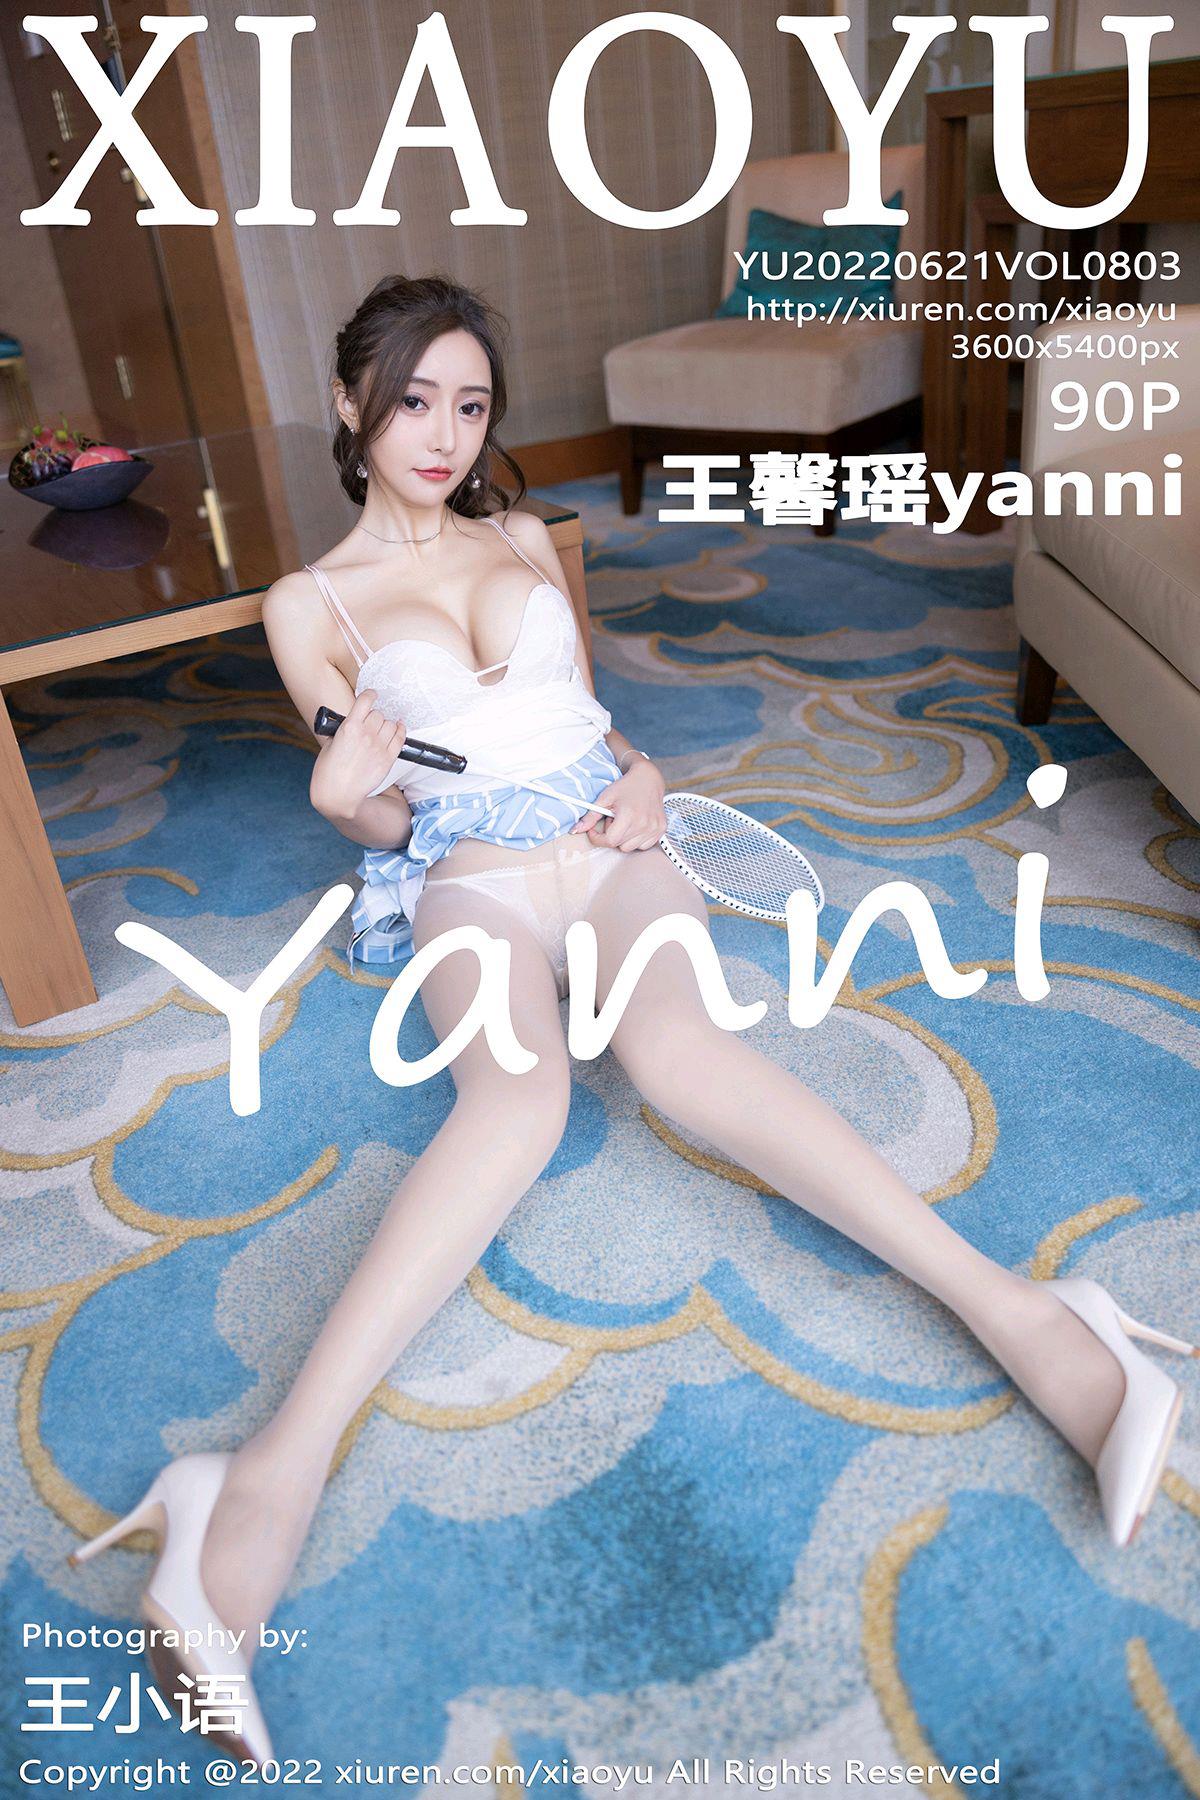 XIAOYU 语画界 2022.06.21 Vol.803 王馨瑶yanni - 91.jpg